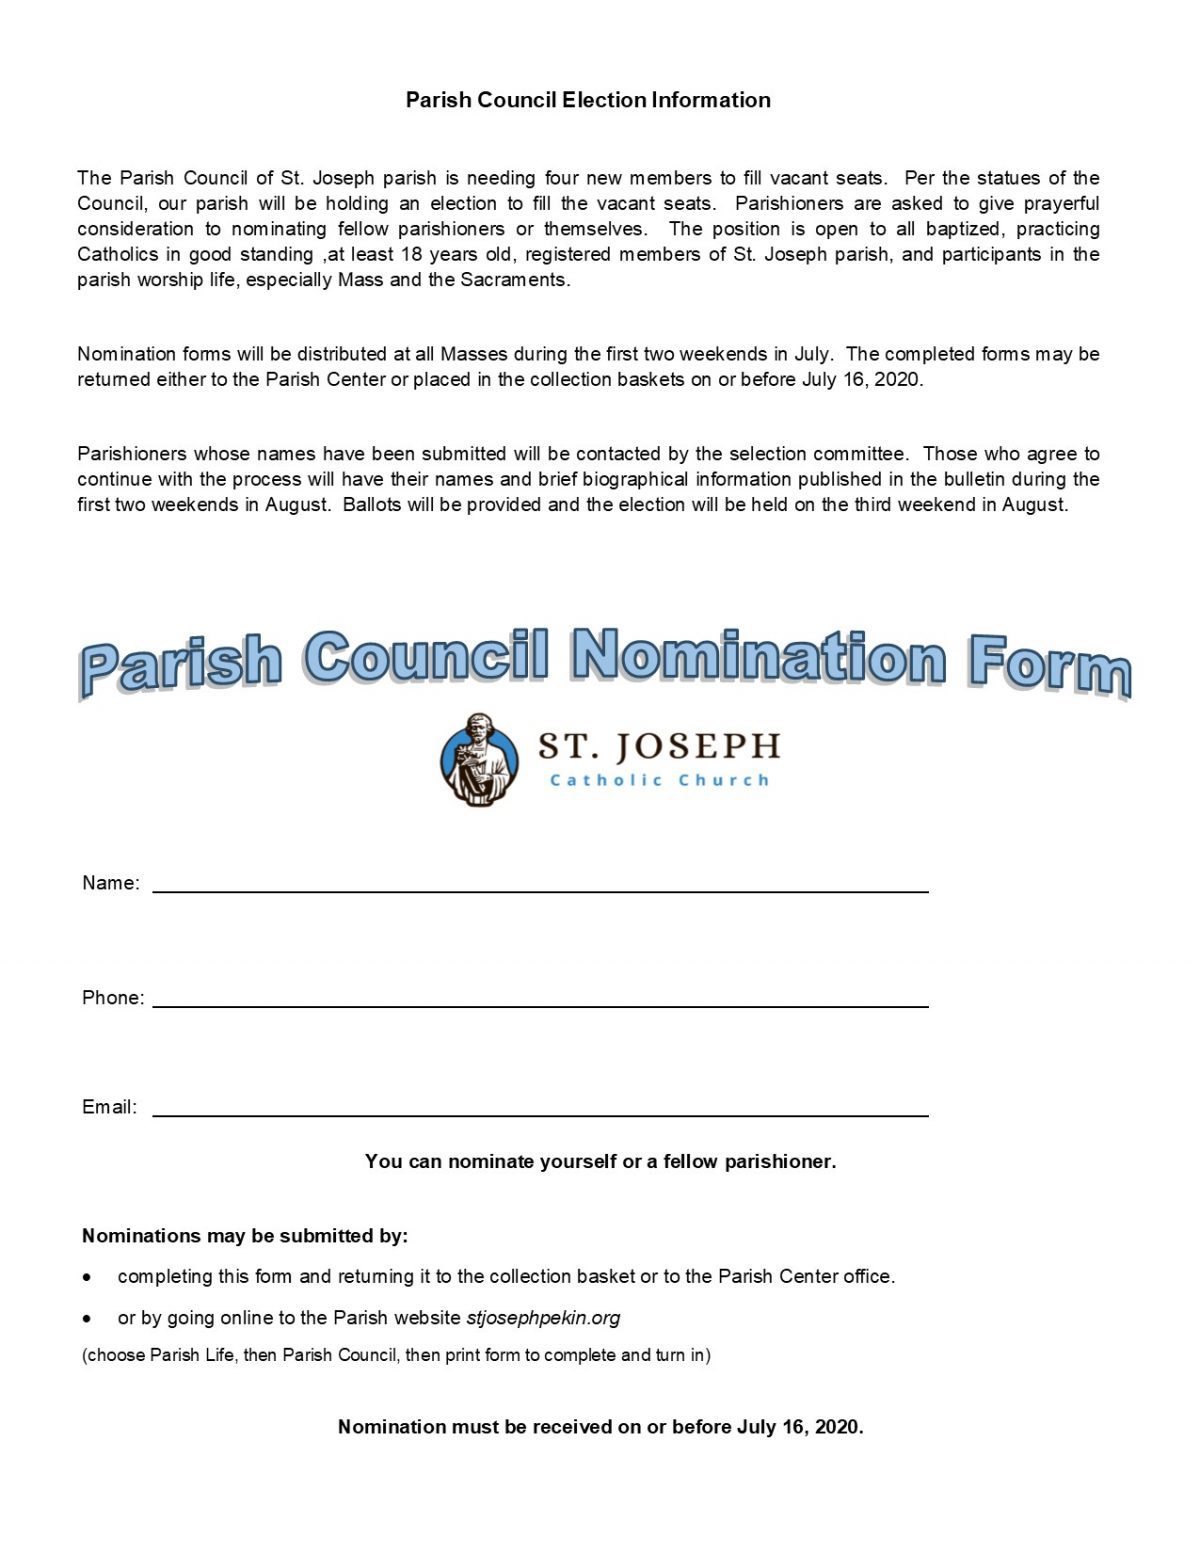 Parish Council Nomination Form 2020 St Joseph Catholic Church